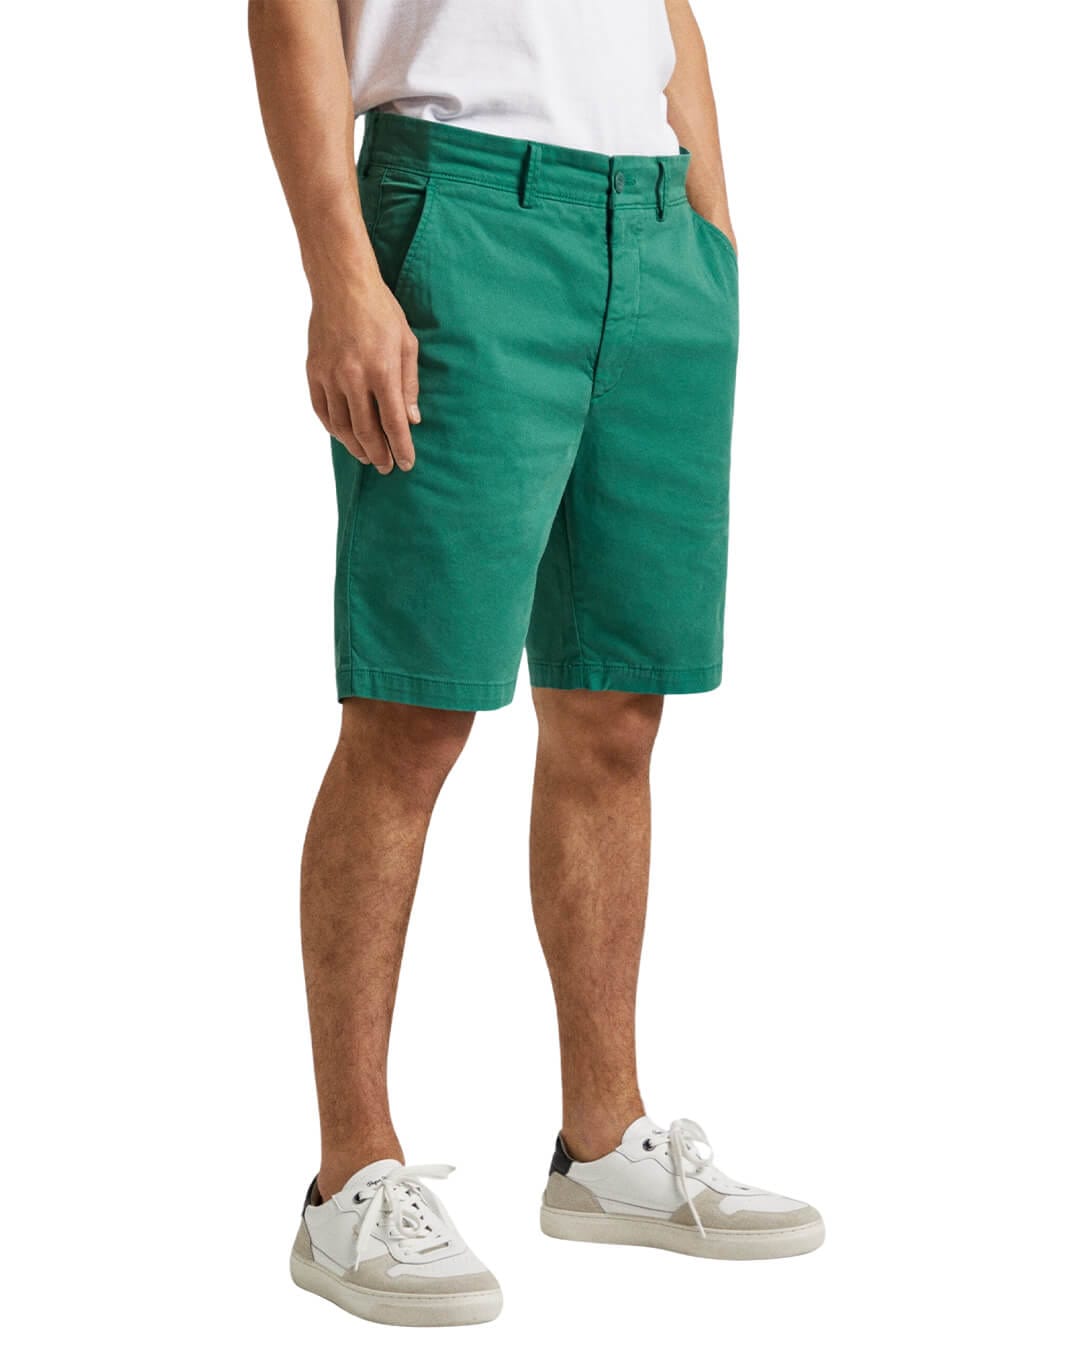 Pepe Jeans Shorts Pepe Jeans Jungle Green Regular Fit Chino Shorts